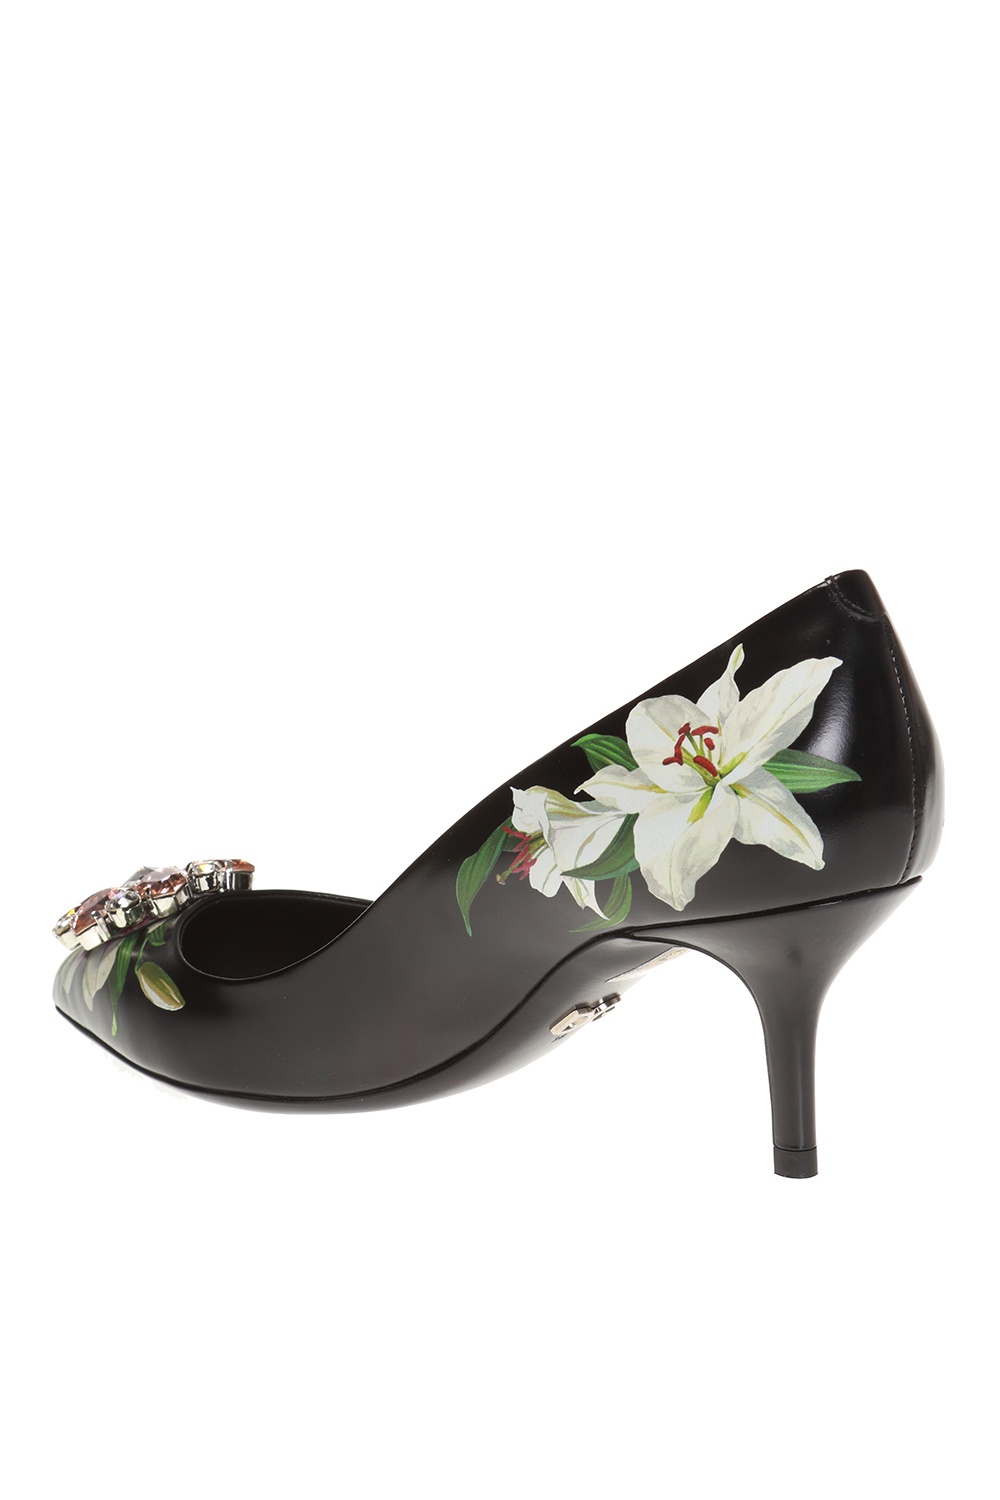 Dolce & Gabbana Floral print pumps | Women's Shoes | Vitkac